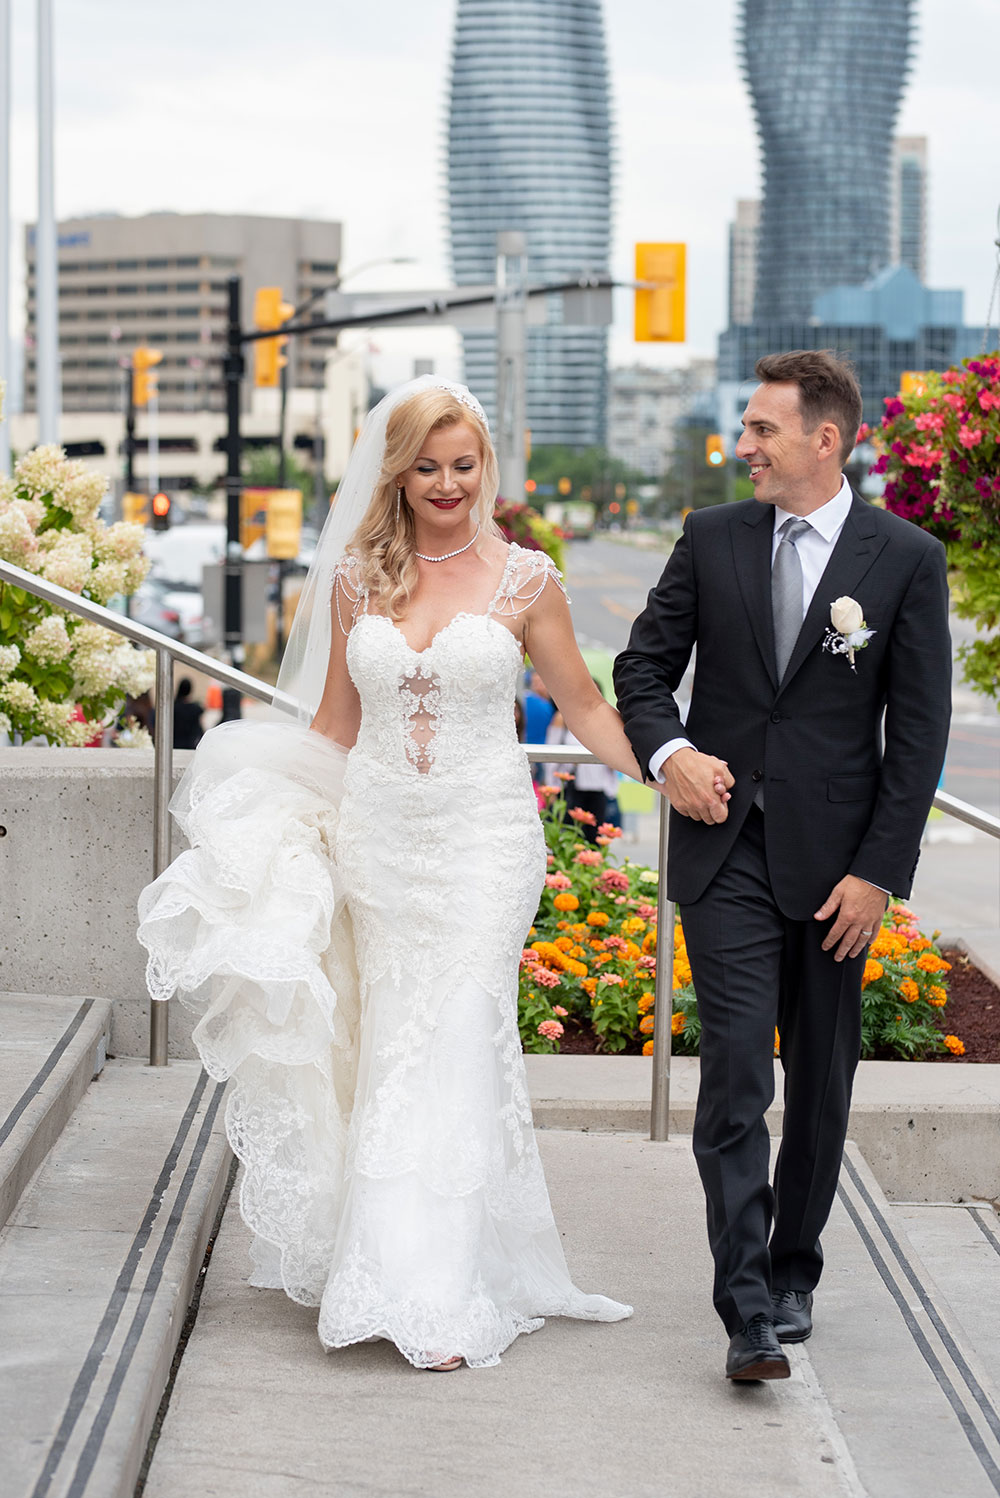 Toronto-destination-wedding-photographer-philosophy-studios-Meg-wedding-photographer-005.JPG